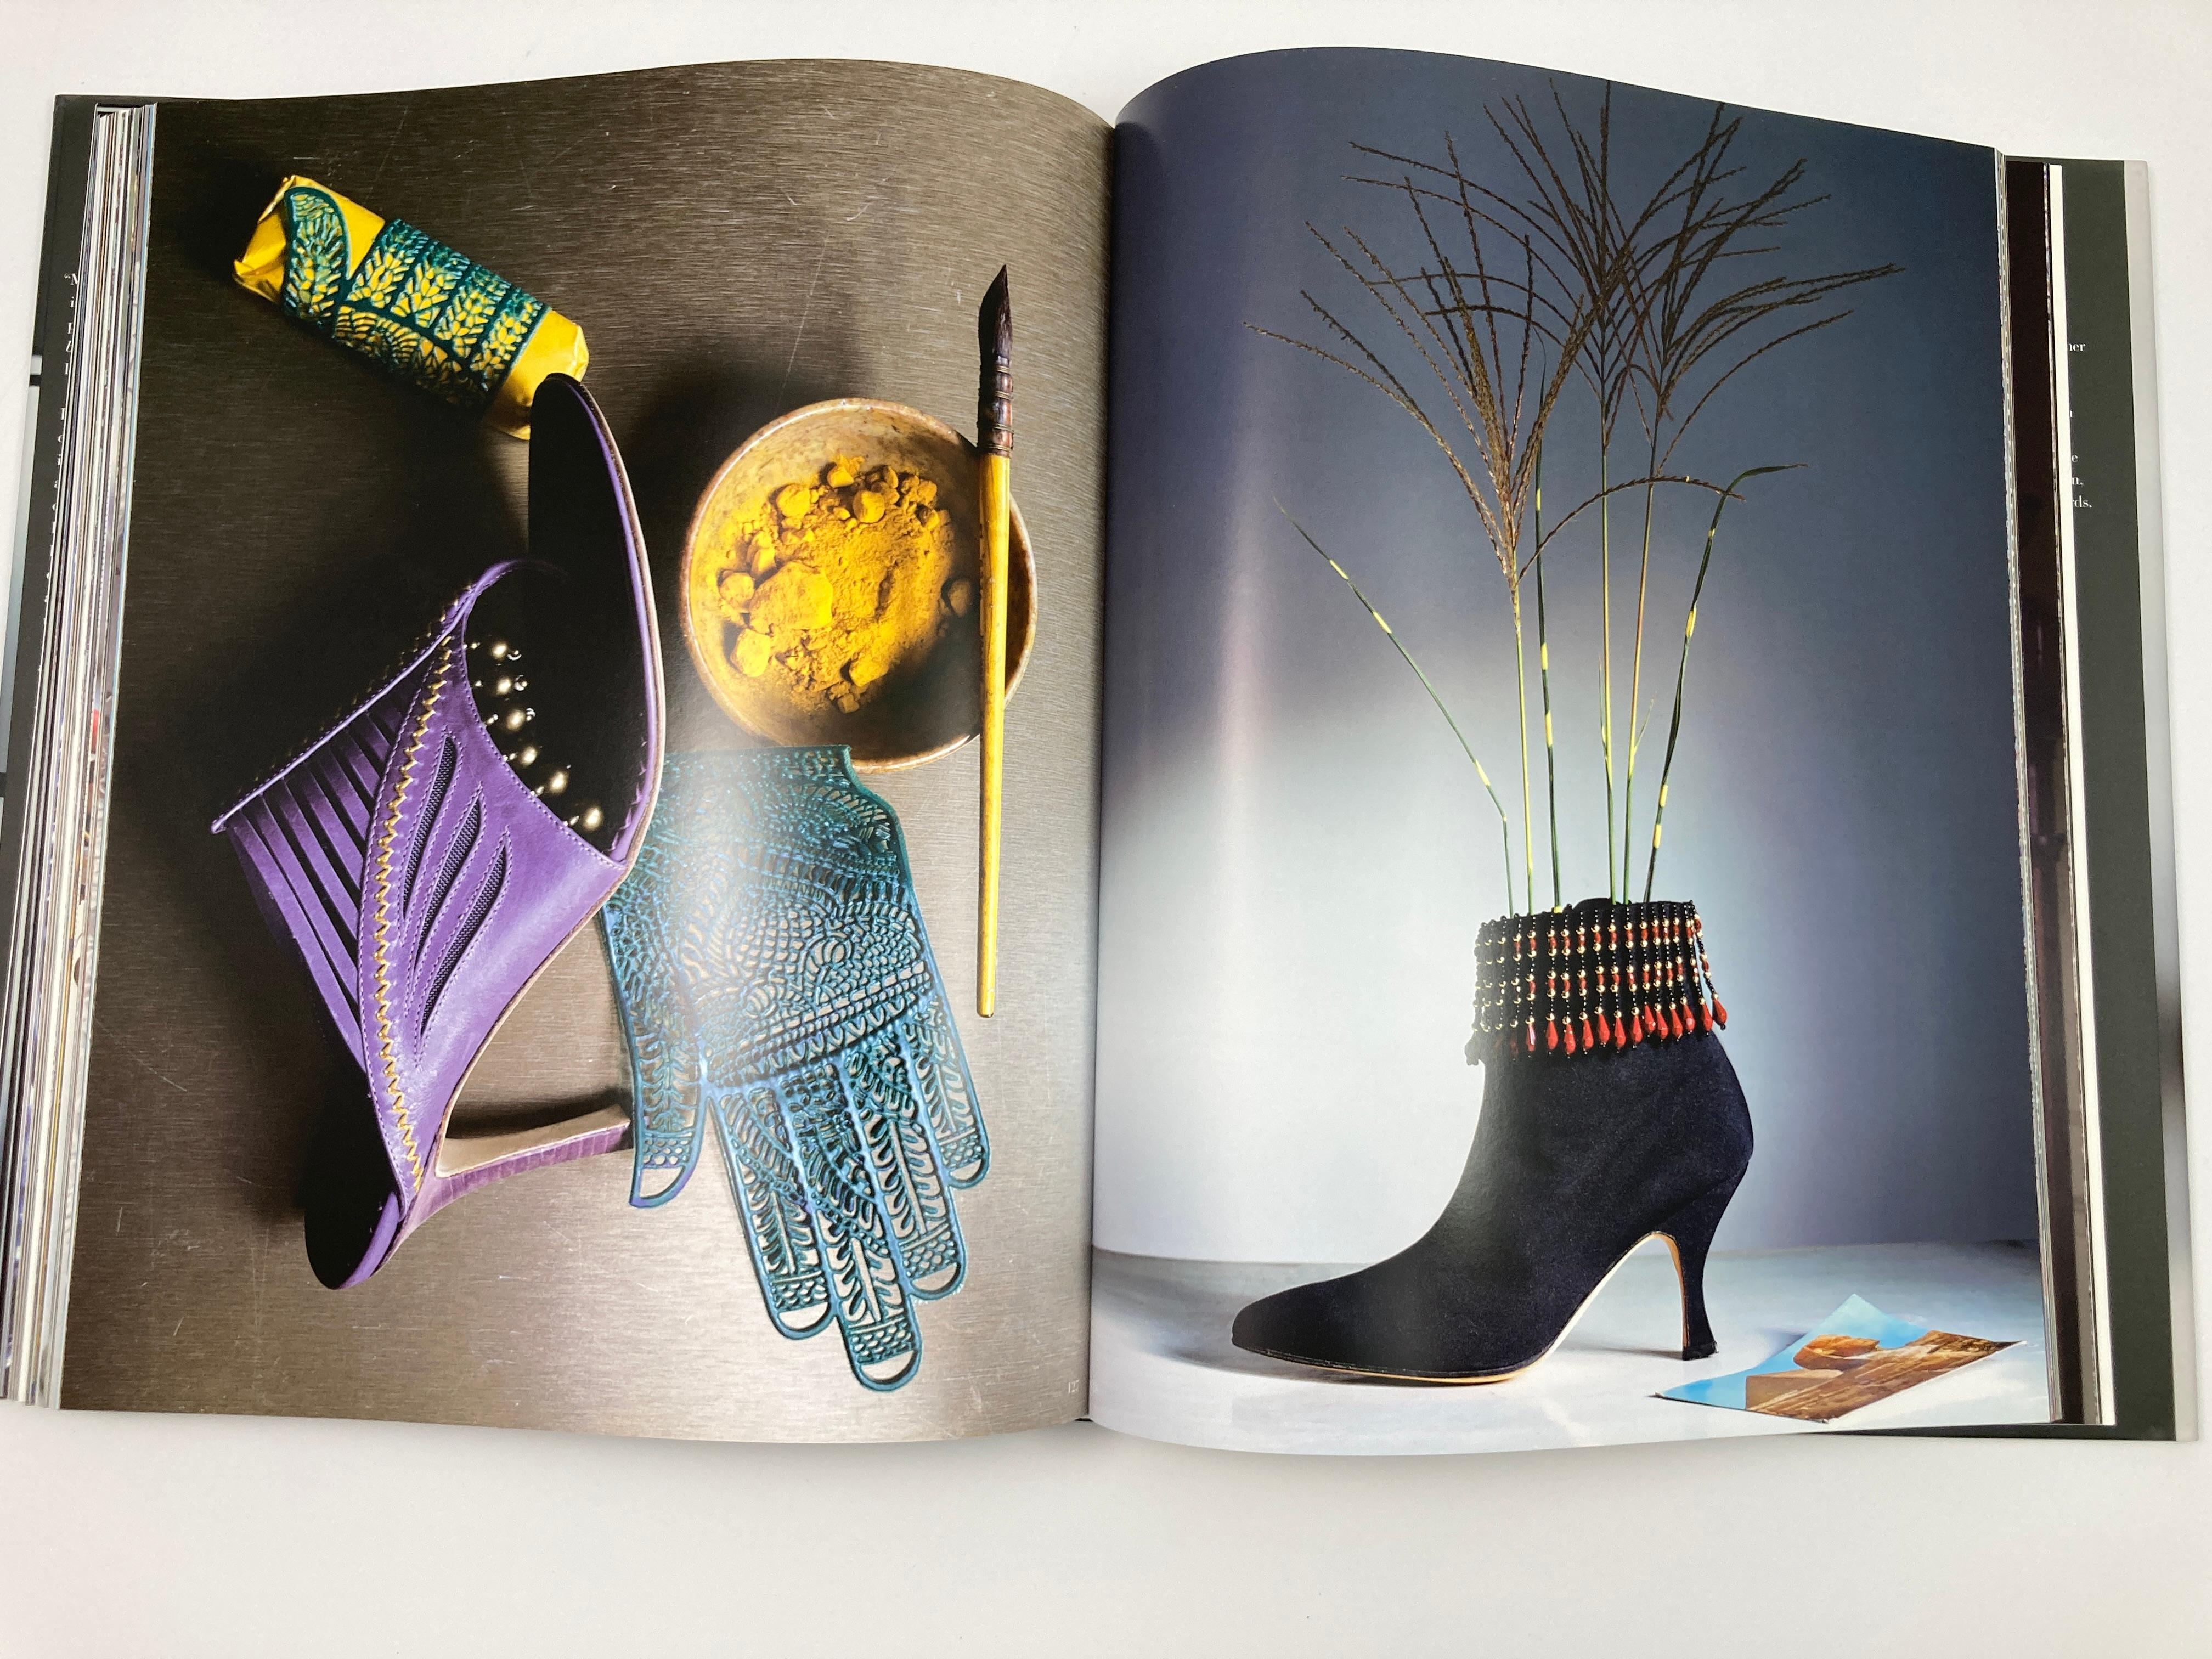 Blahnik by Boman: Shoes, Photographs, ConversationLarge Coffee Table Book 8